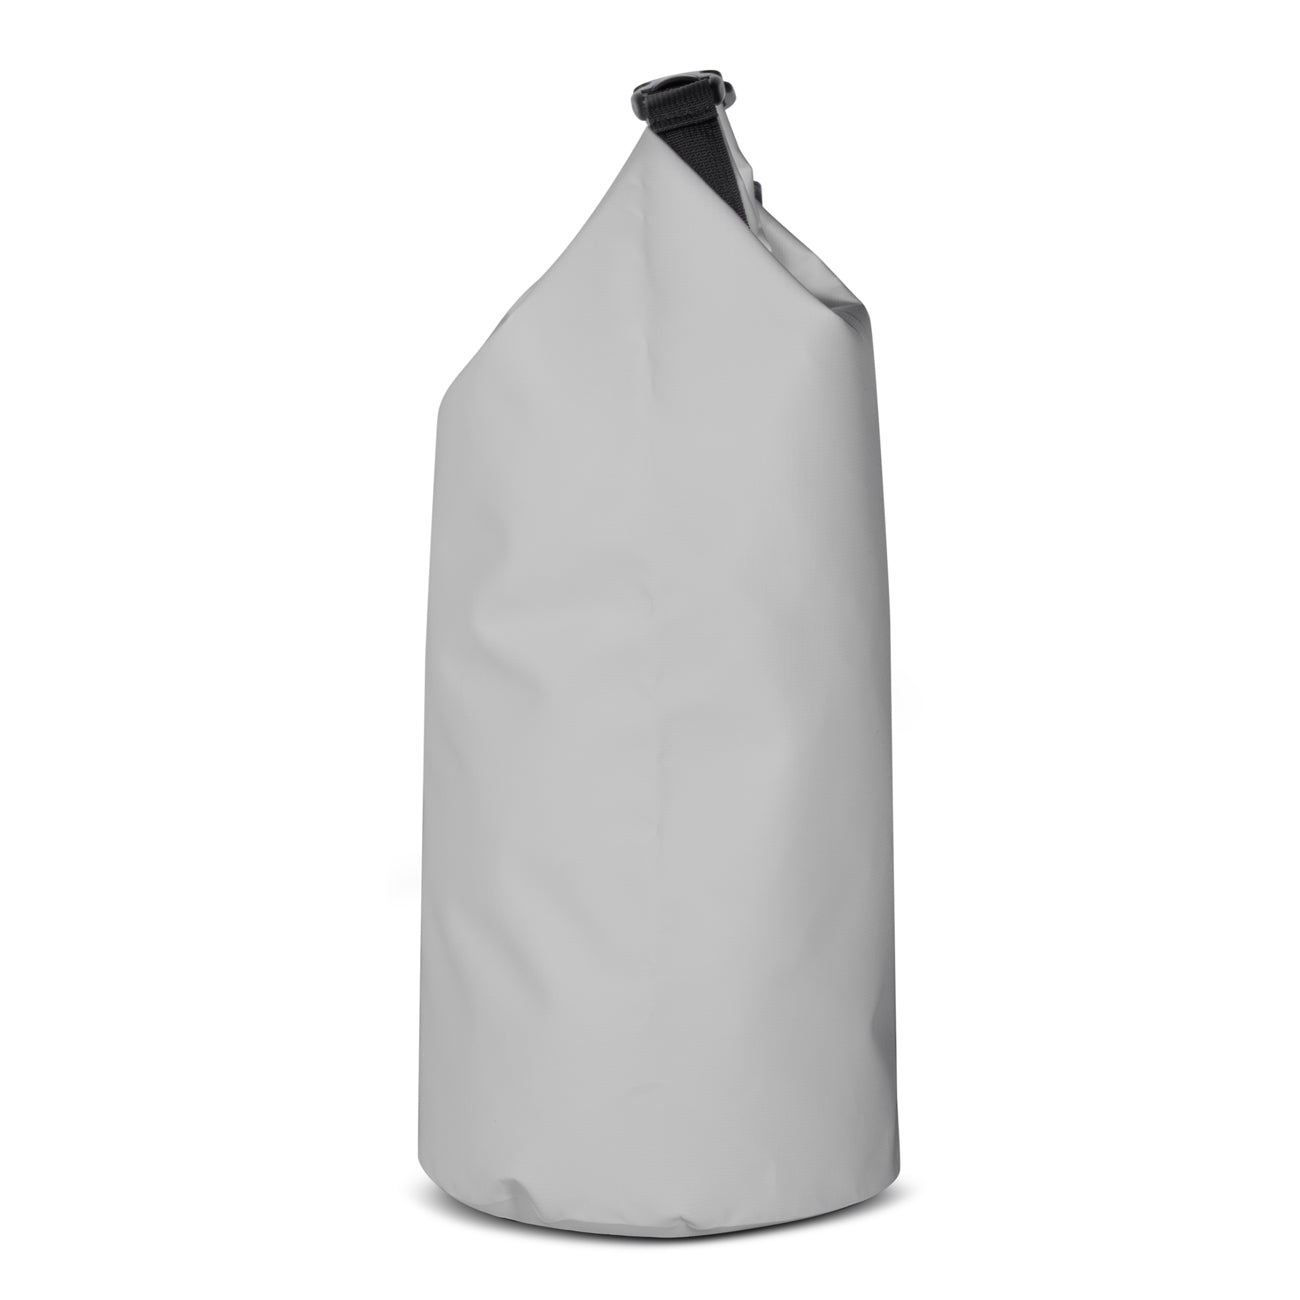 PVC waterproof backpack bag 10l - gray